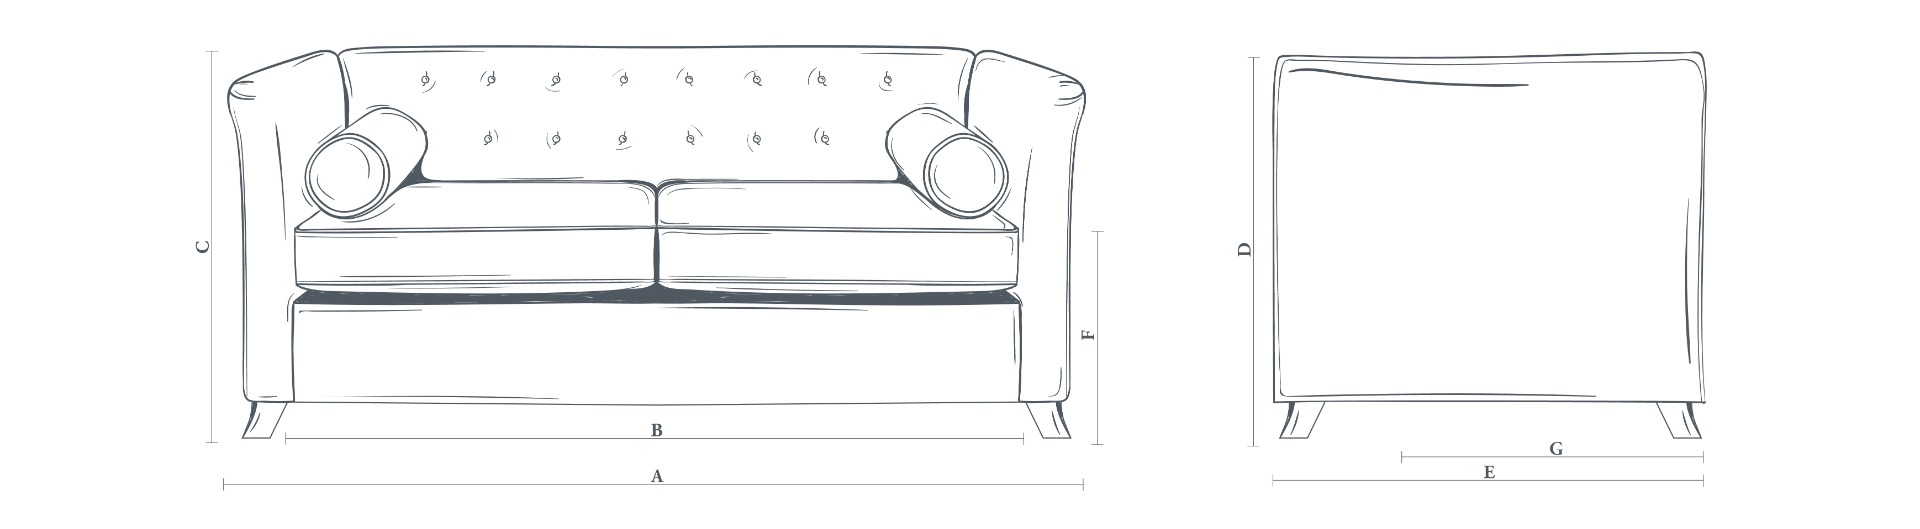 The Gastard Sofa 3 Seater